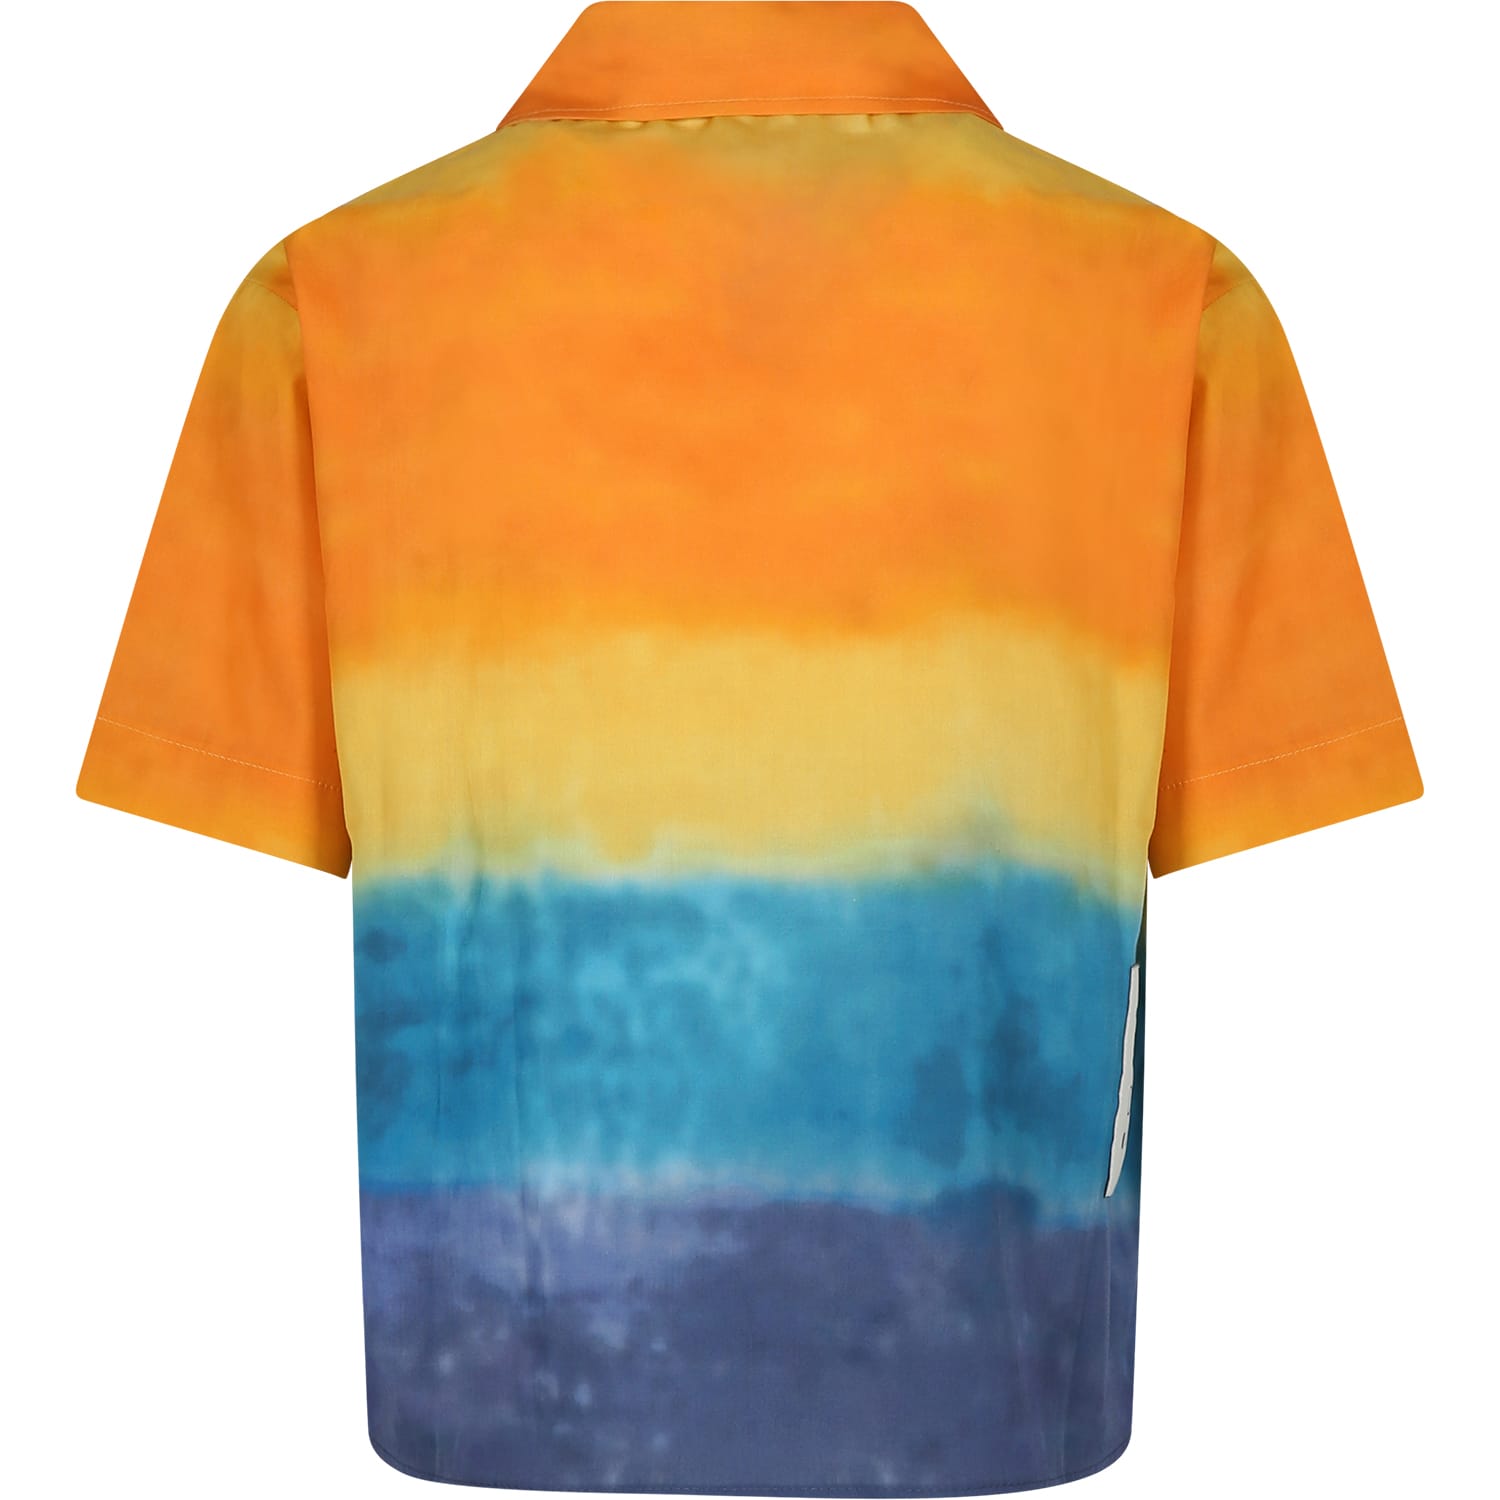 Shop Msgm Orange Shirt For Boy With Palm Tree Print